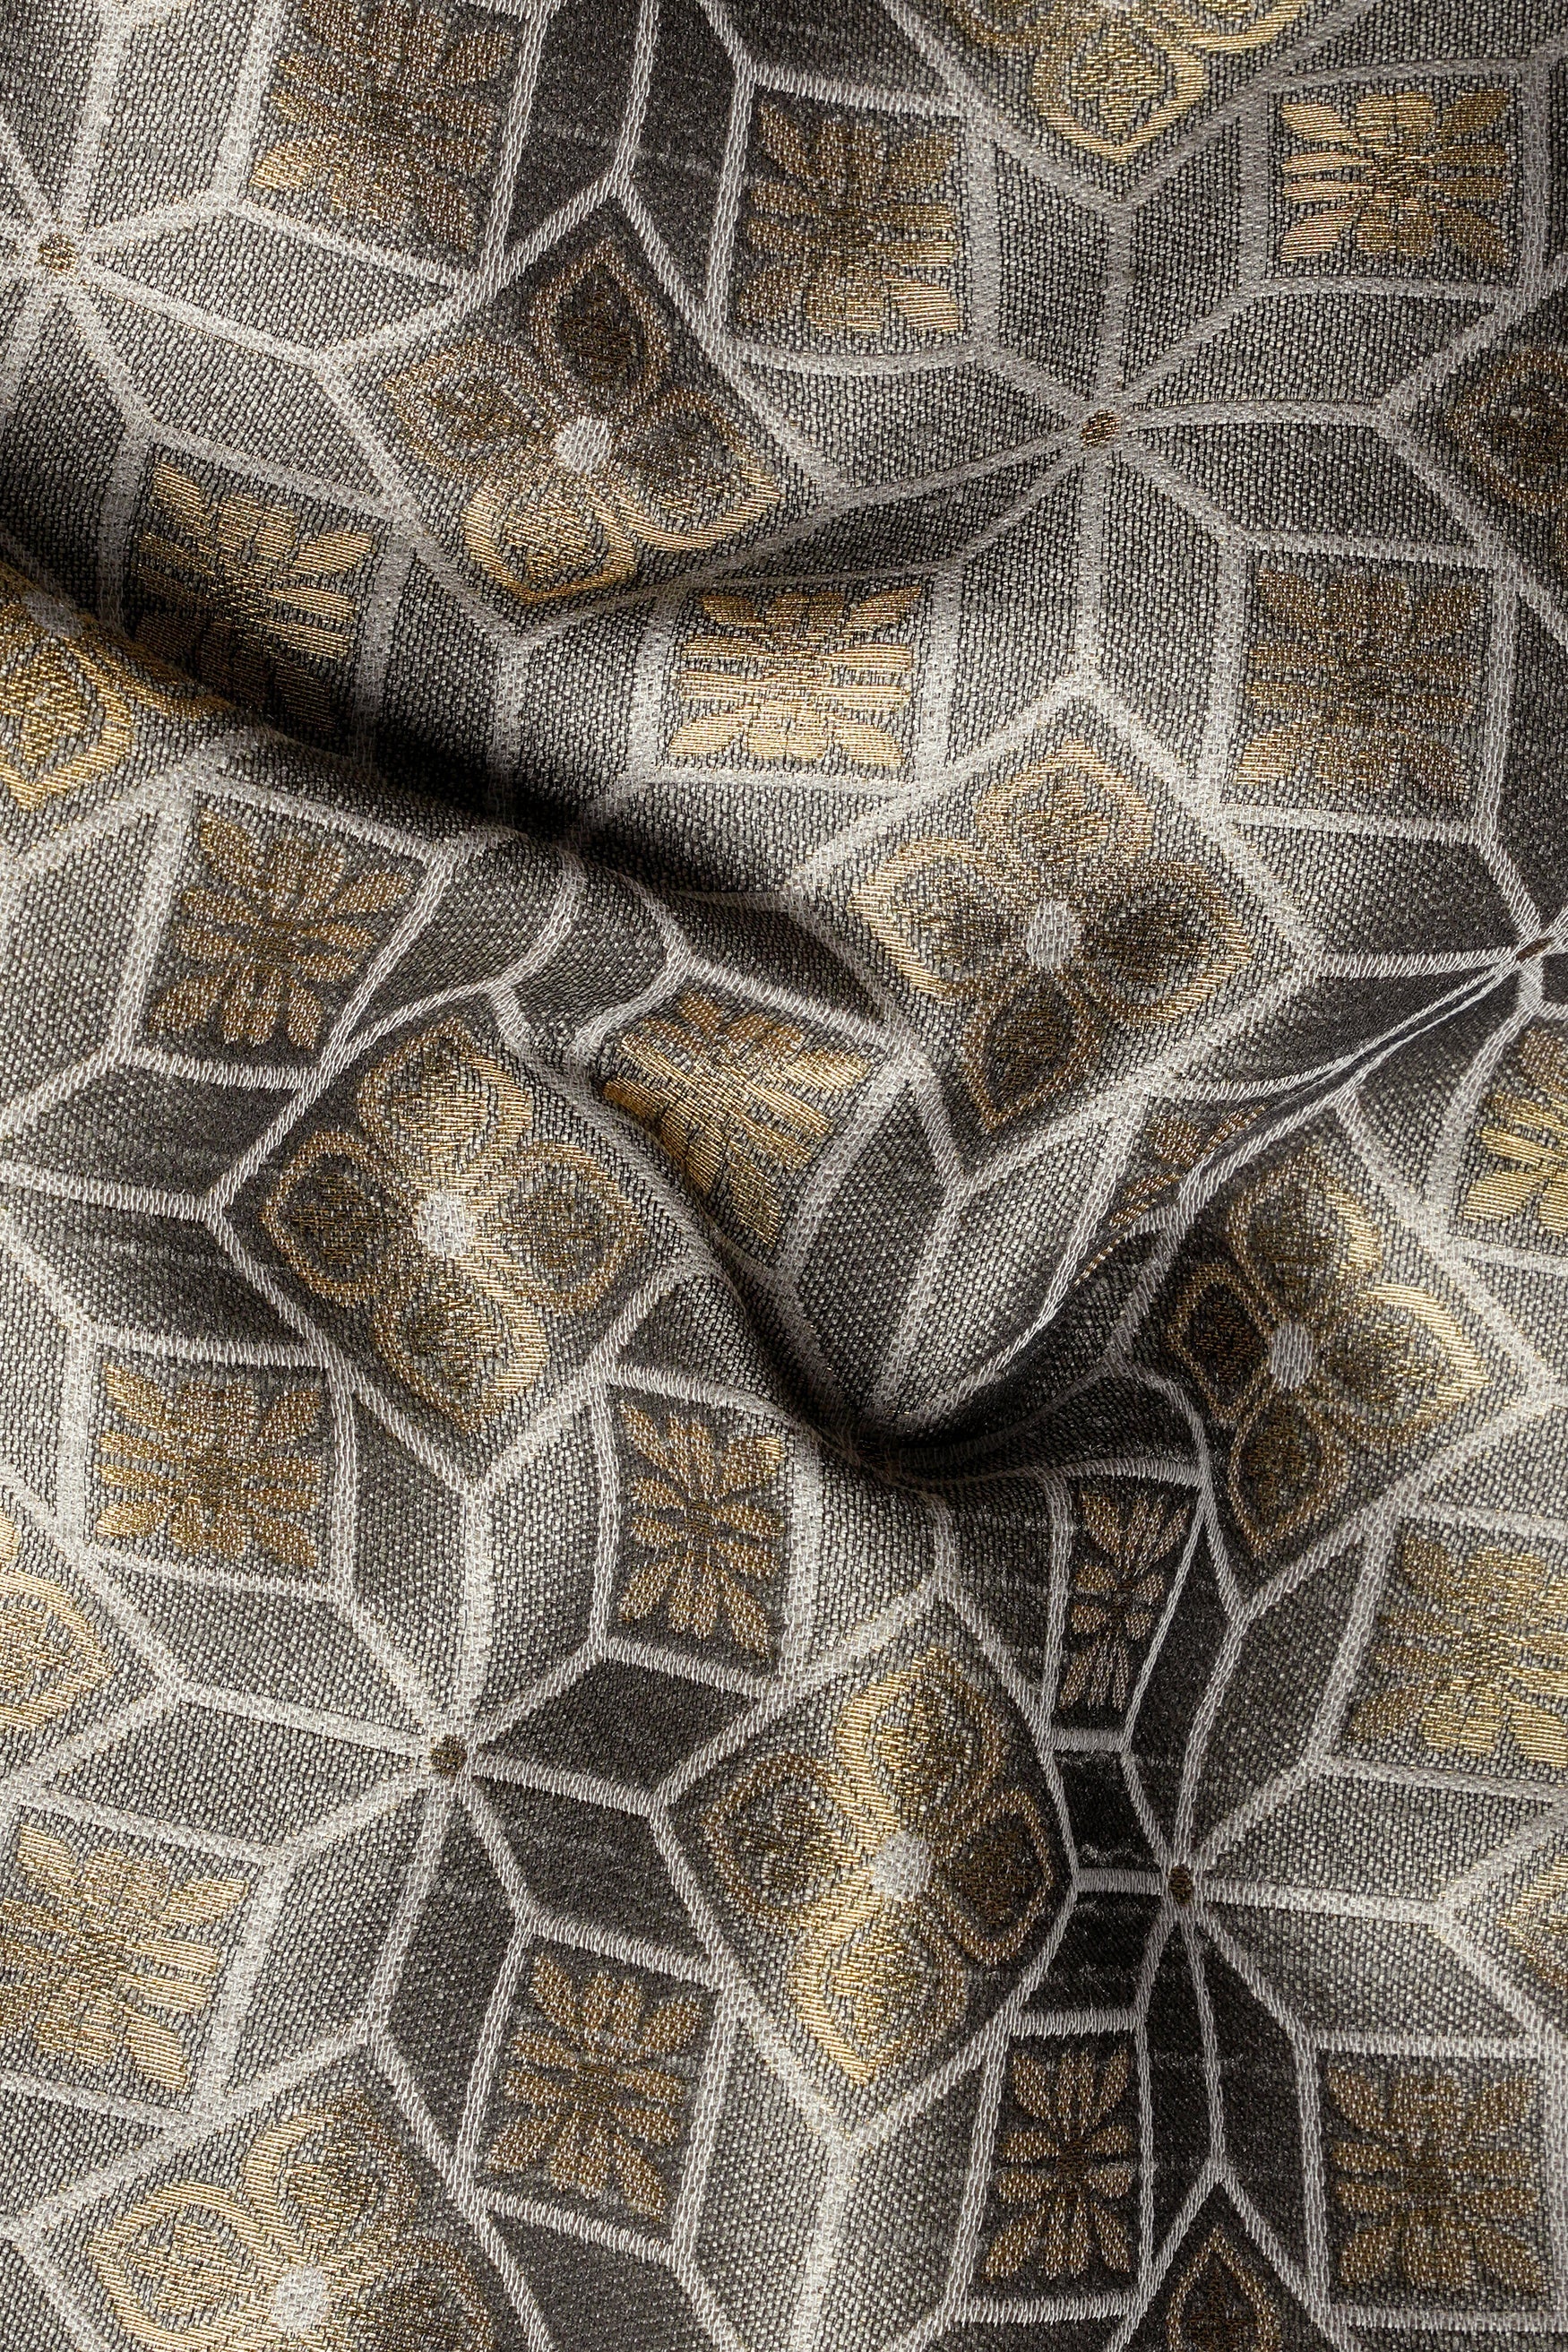 Sorrell Brown and Schooner Gray Geometric Jacquard Textured Designer Nehru Jacket